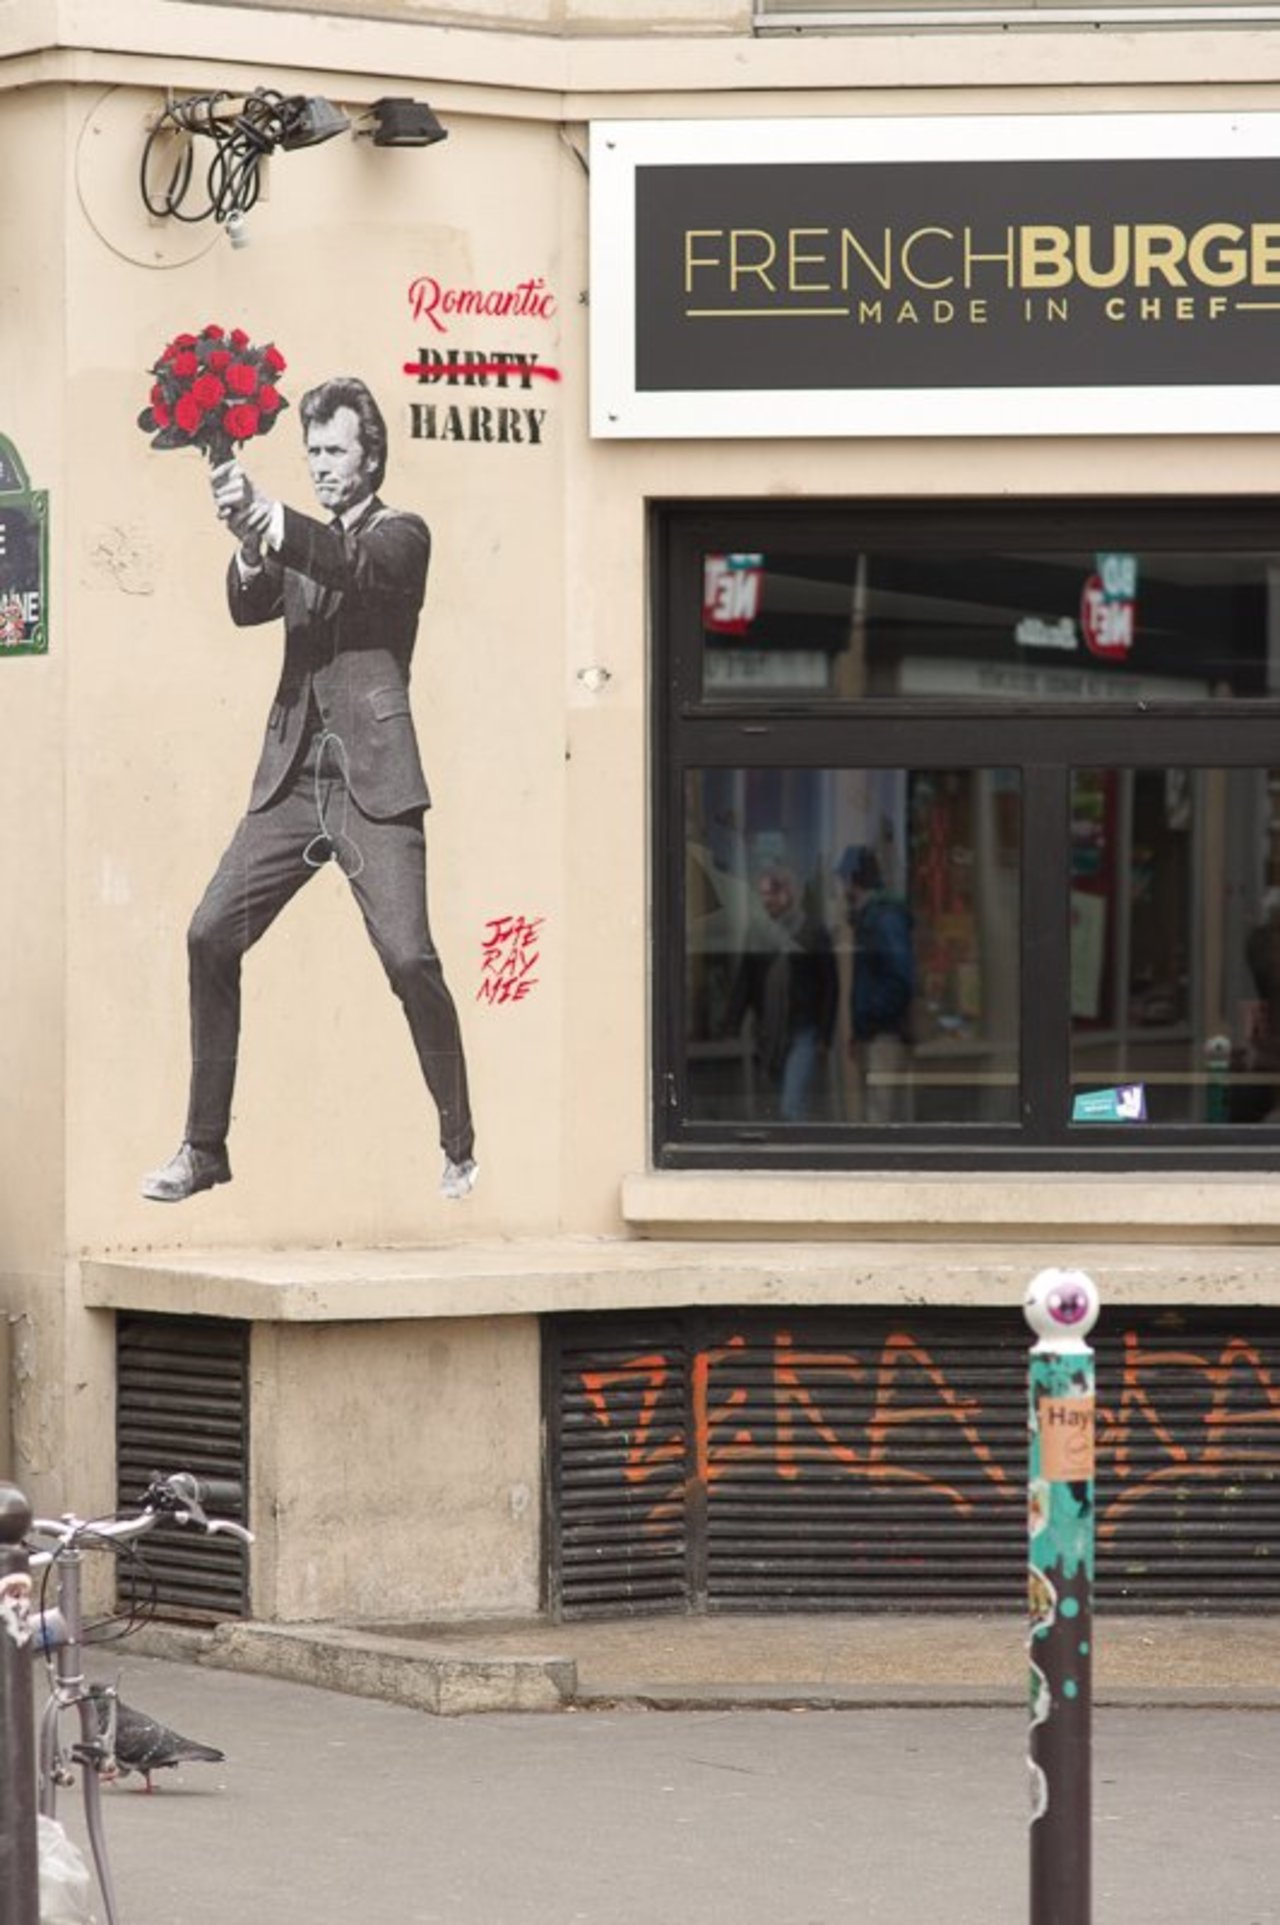 #graffiti #mural #Urban_Art Romantic Harry by Jae Ray Mie, Rue de Charonne, Paris, 04/2017 https://t.co/wjAaUXYG6b